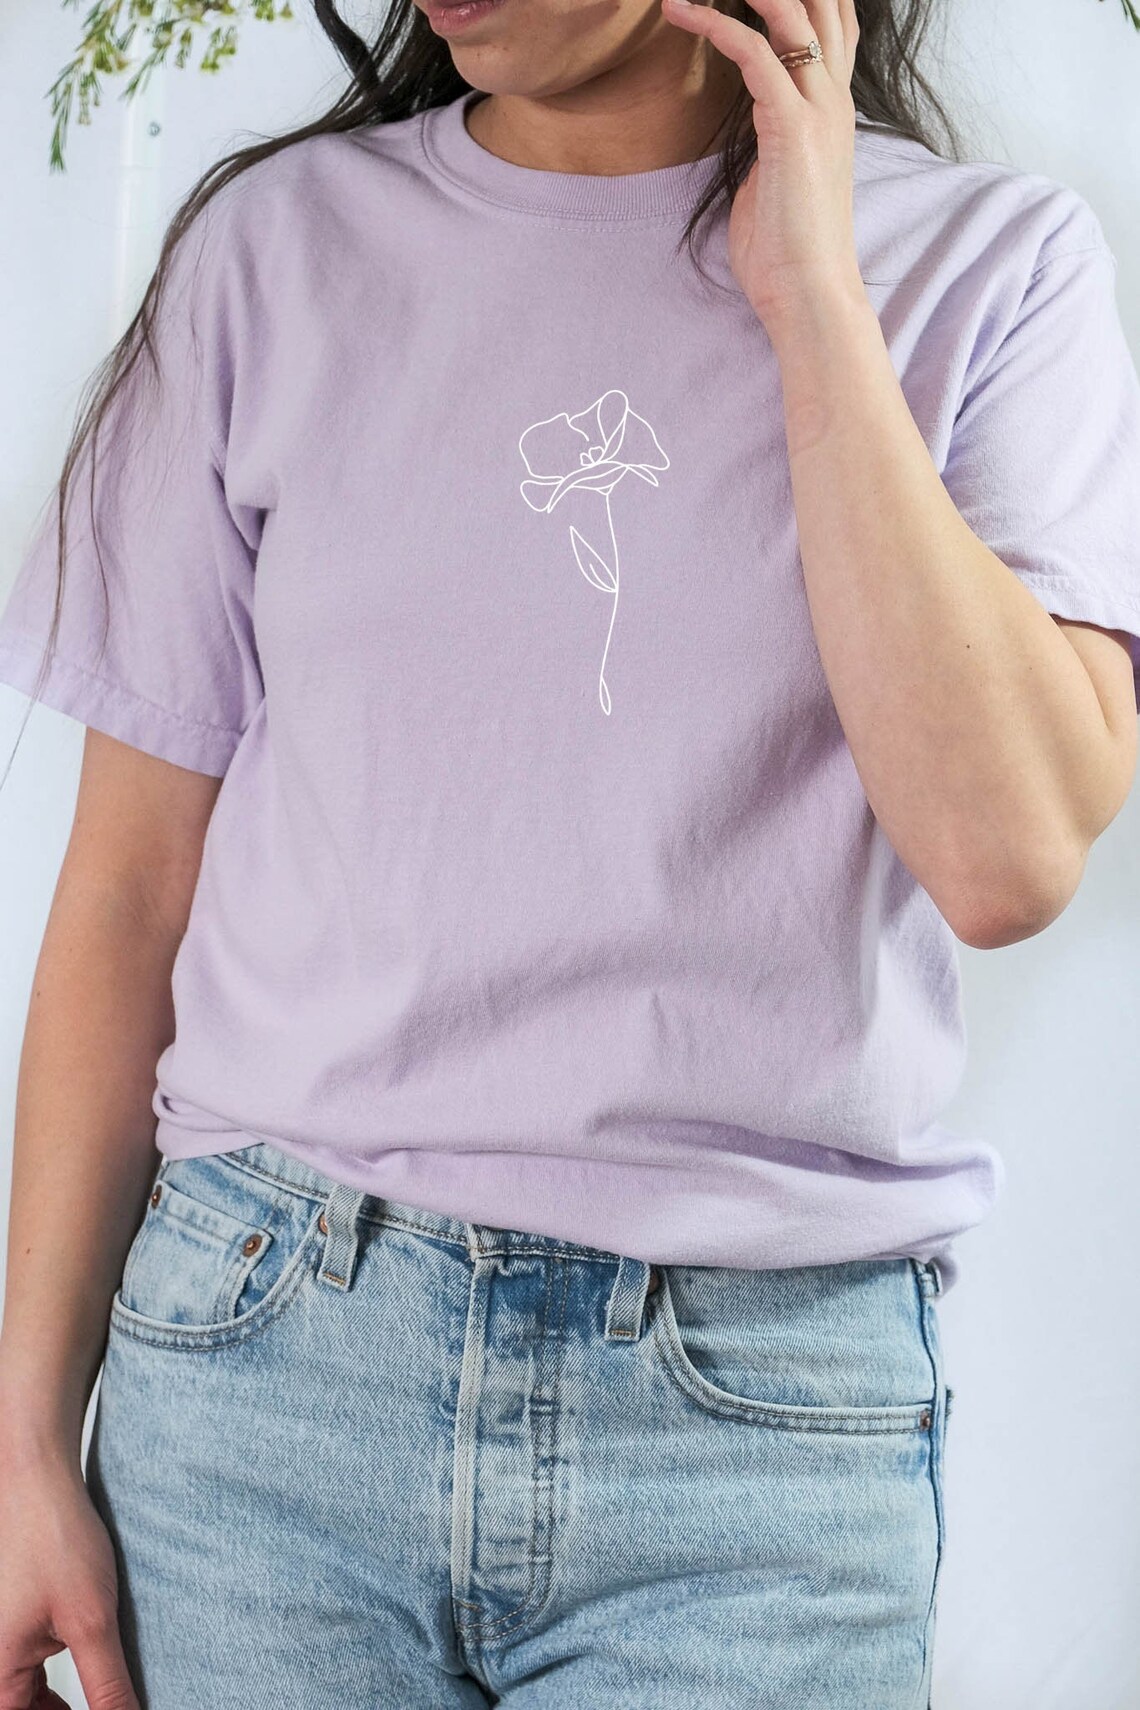 Birth Month Tee Shirt For Women Birth Month Flower T-Shirt | Etsy